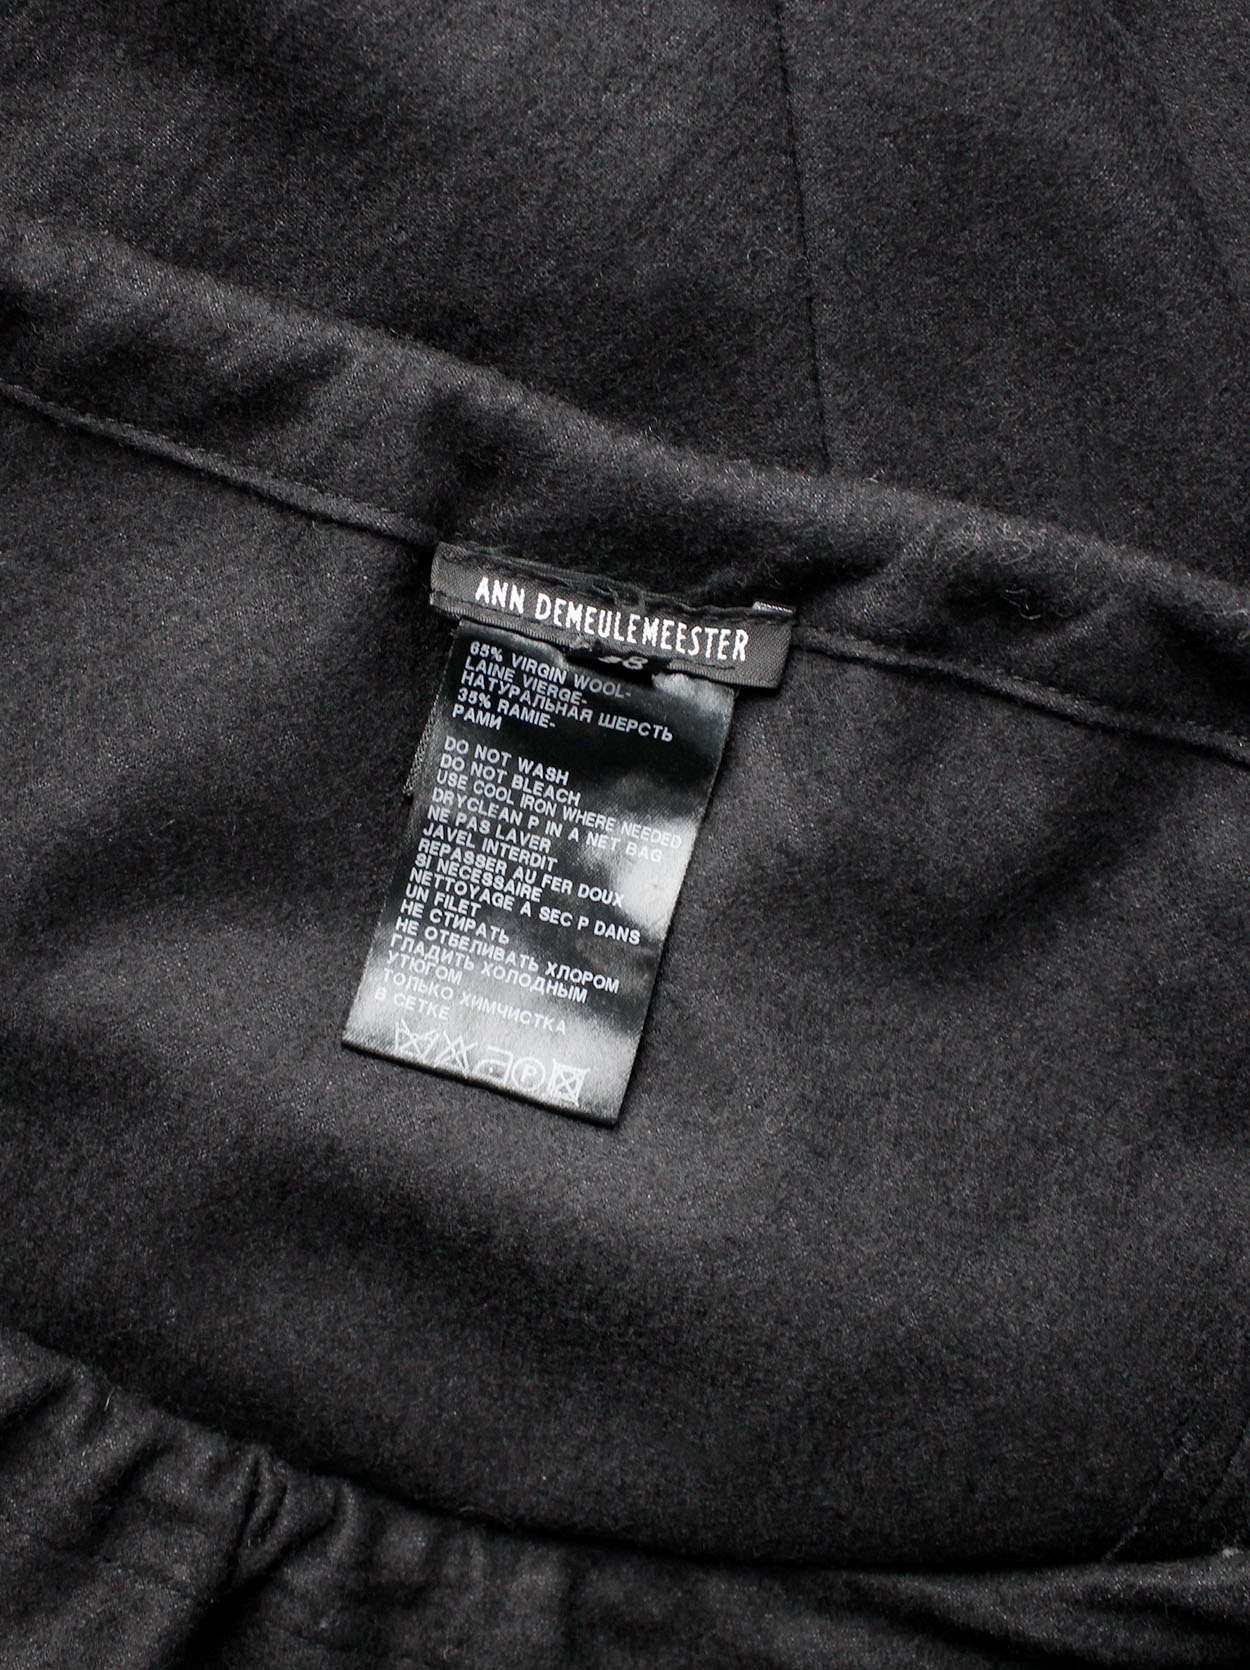 Ann Demeulemeester black wool maxi skirt with mermaid train — fall 2006 ...